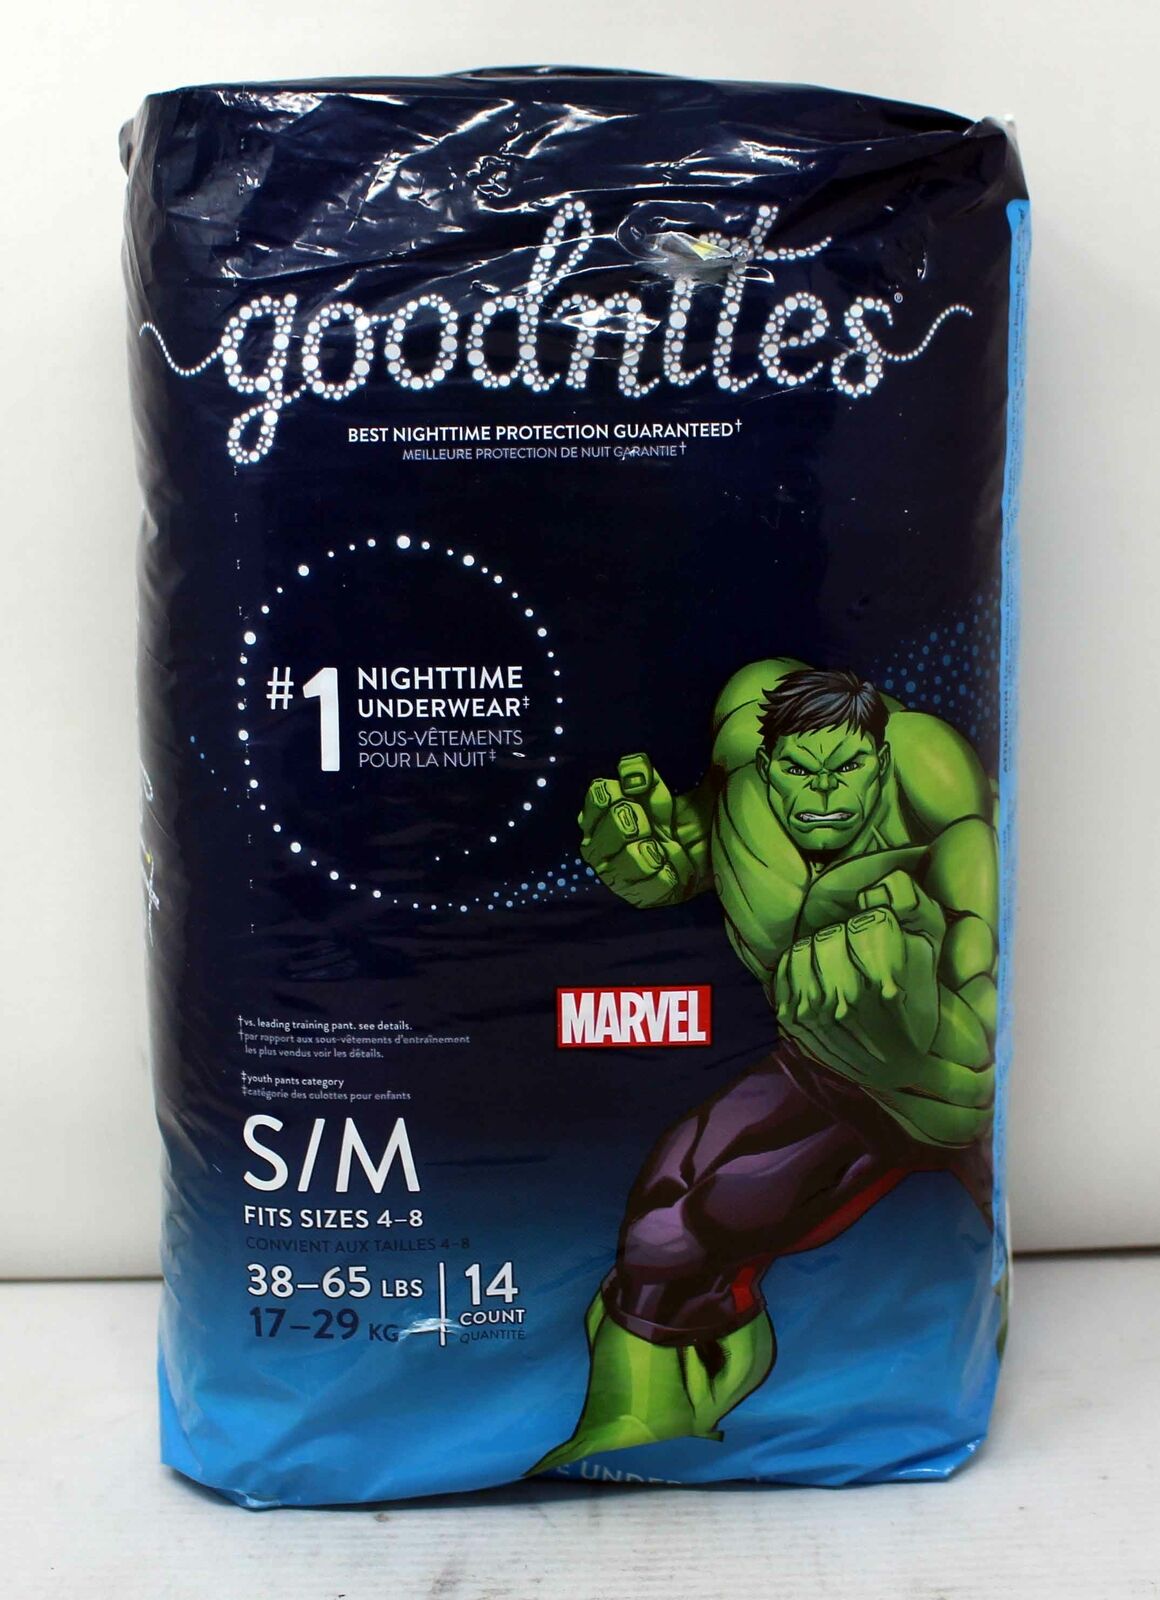 Goodnites Marvel S/M 38-65 LBS 14 Count